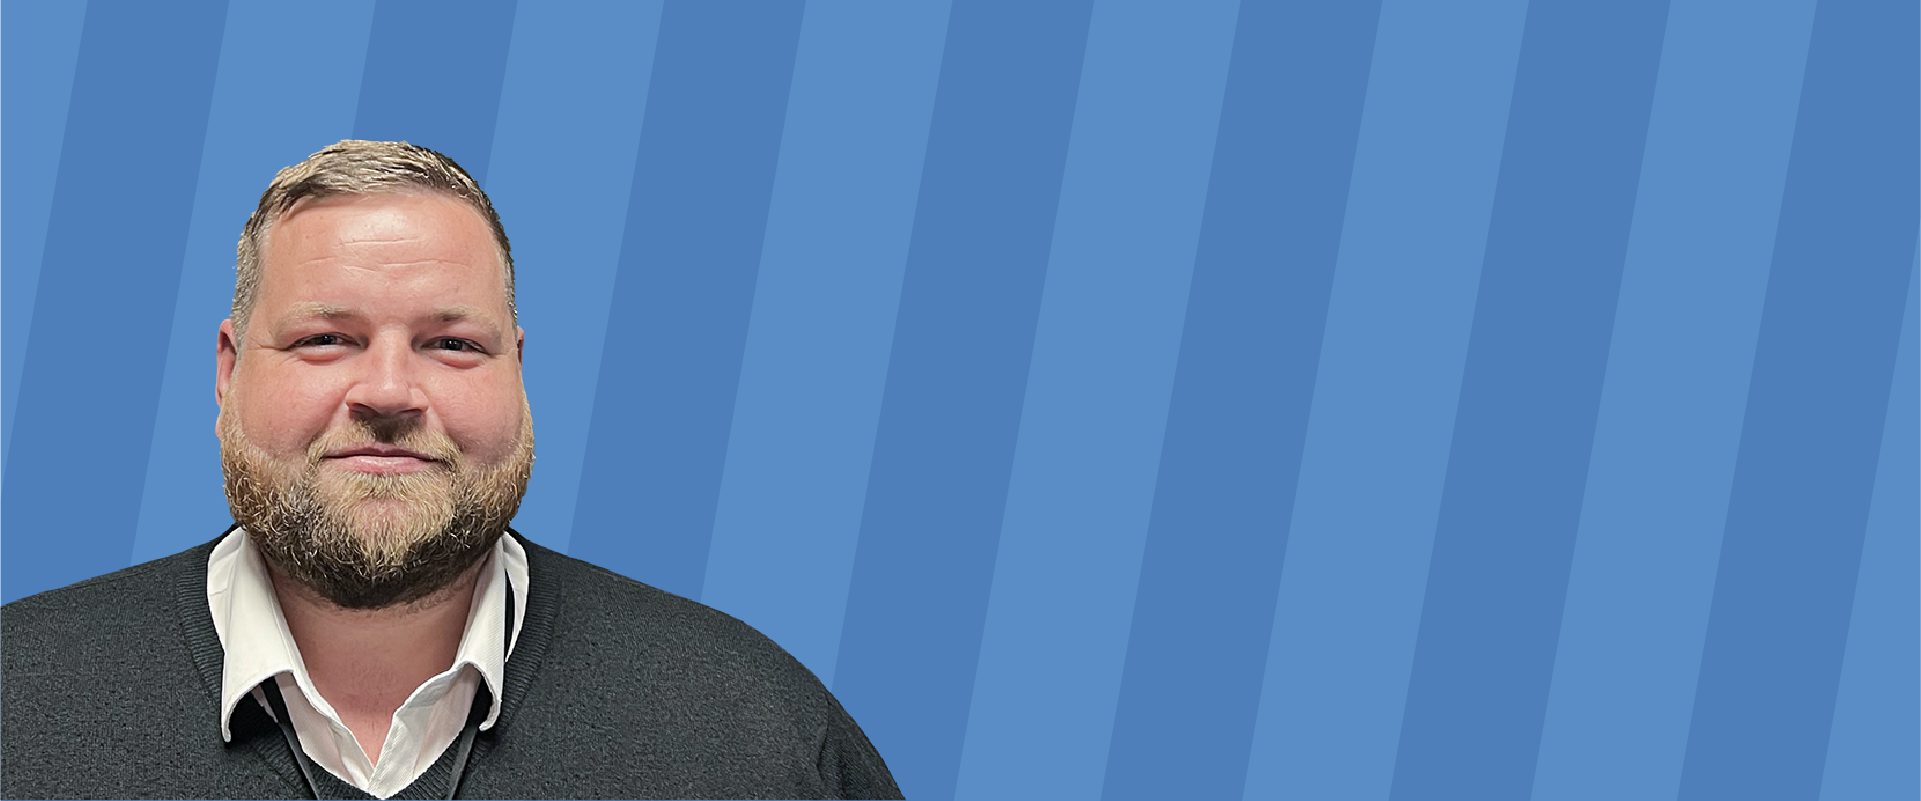 Inside 3PL: Meet James Taylor, Business Development Manager